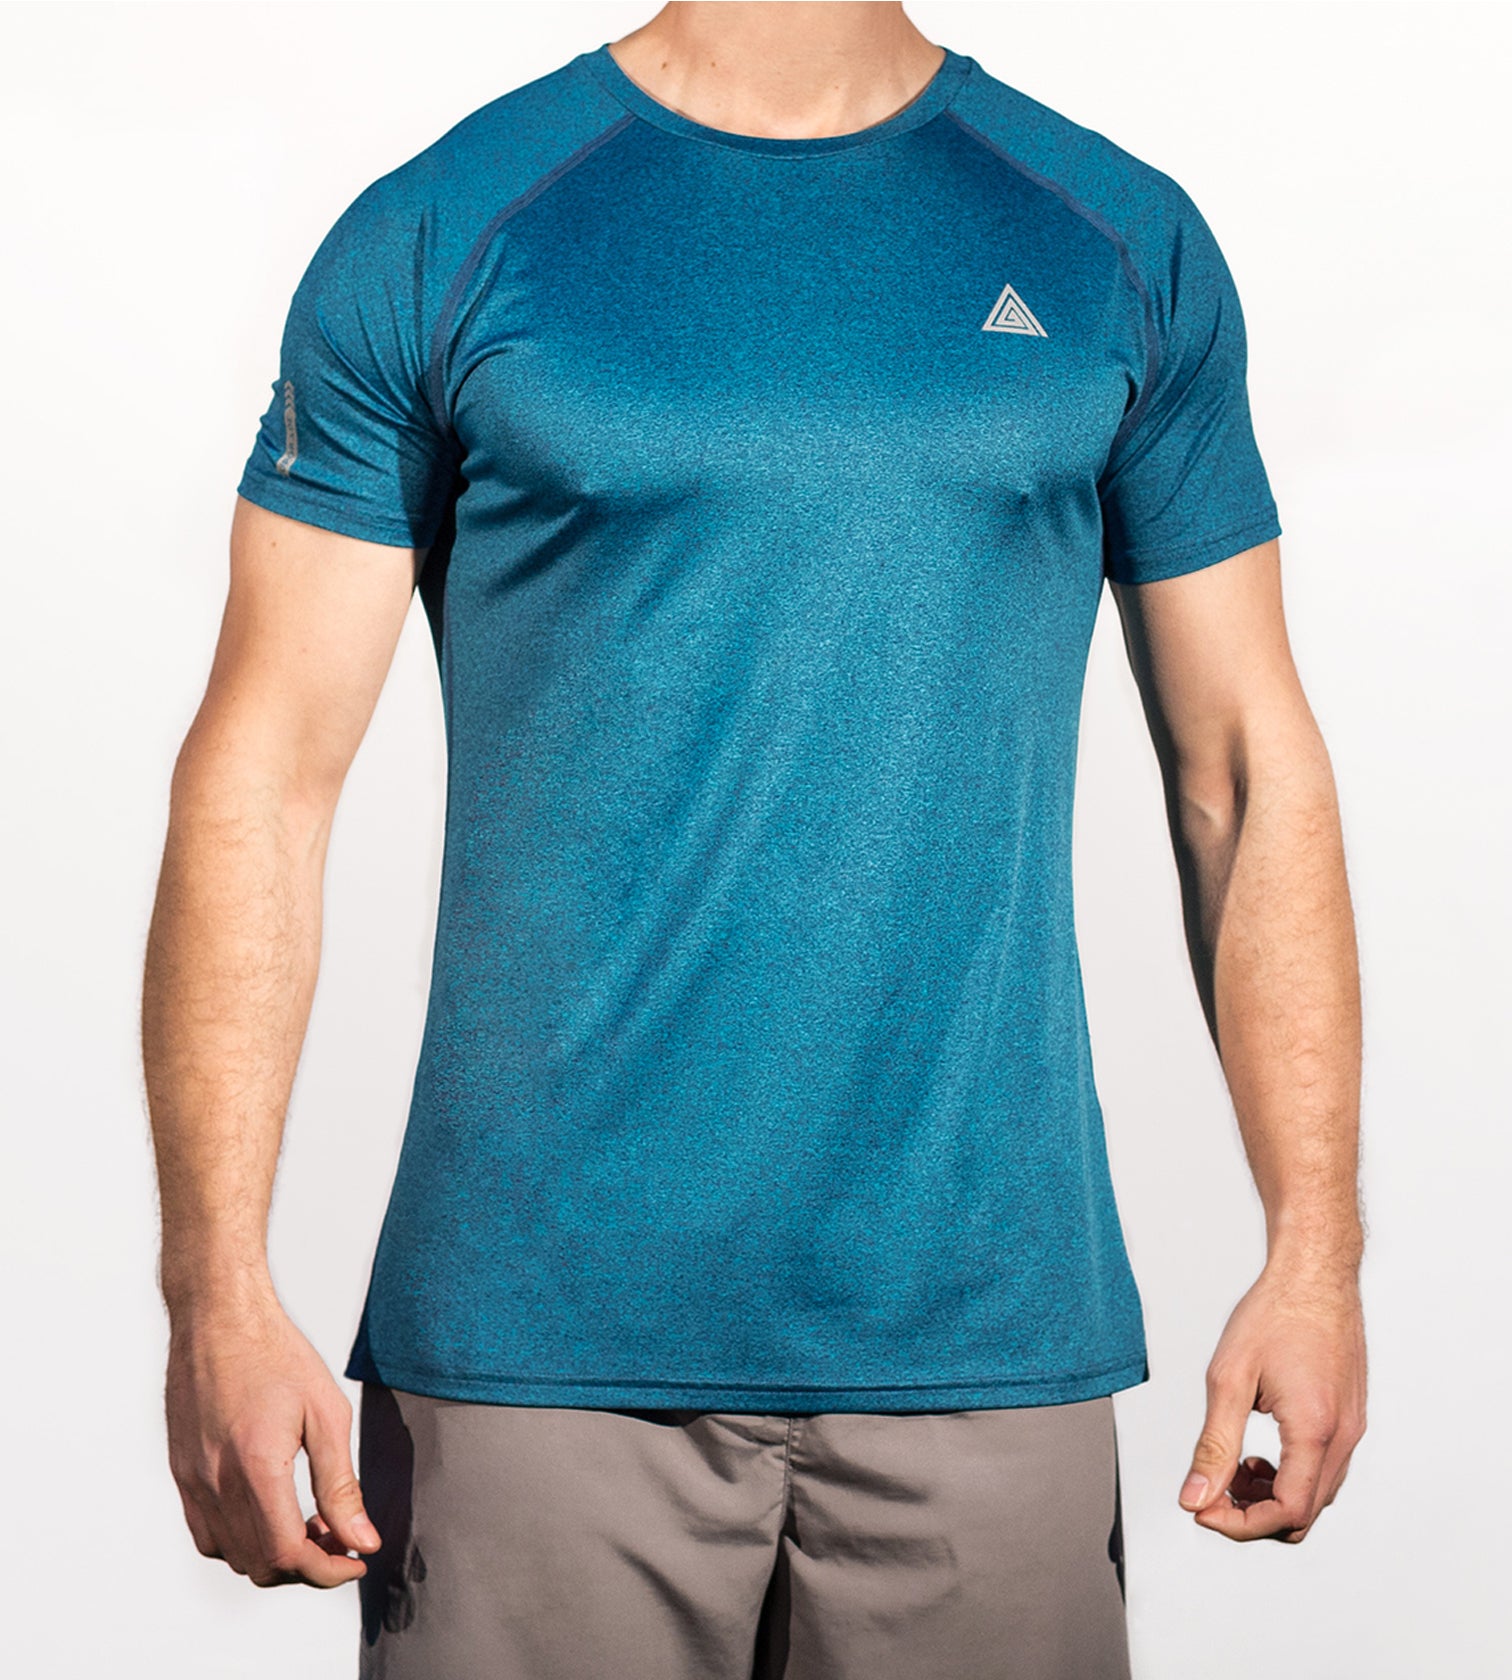 Camisetas tecnicas running, trail running, gym - Aran – Upgrade Wear